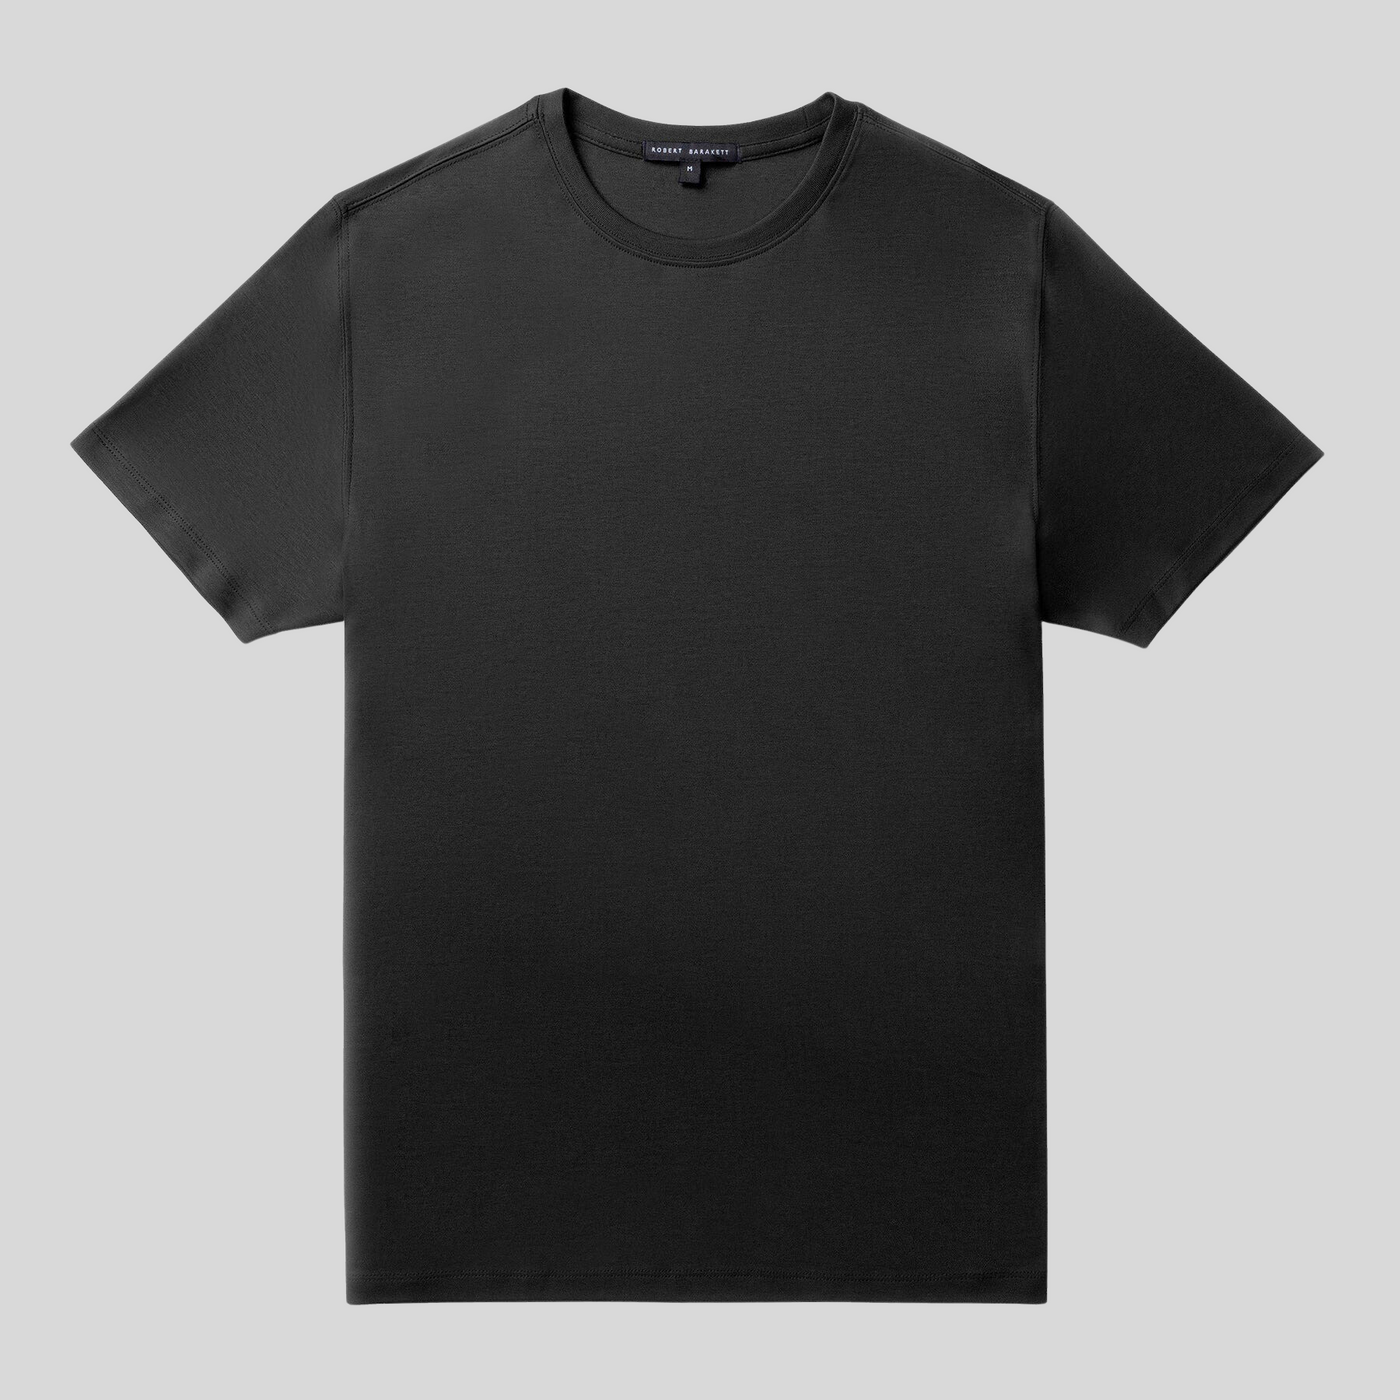 Gotstyle Fashion - Robert Barakett T-Shirts Soft Pima Cotton Crew Tee - Black